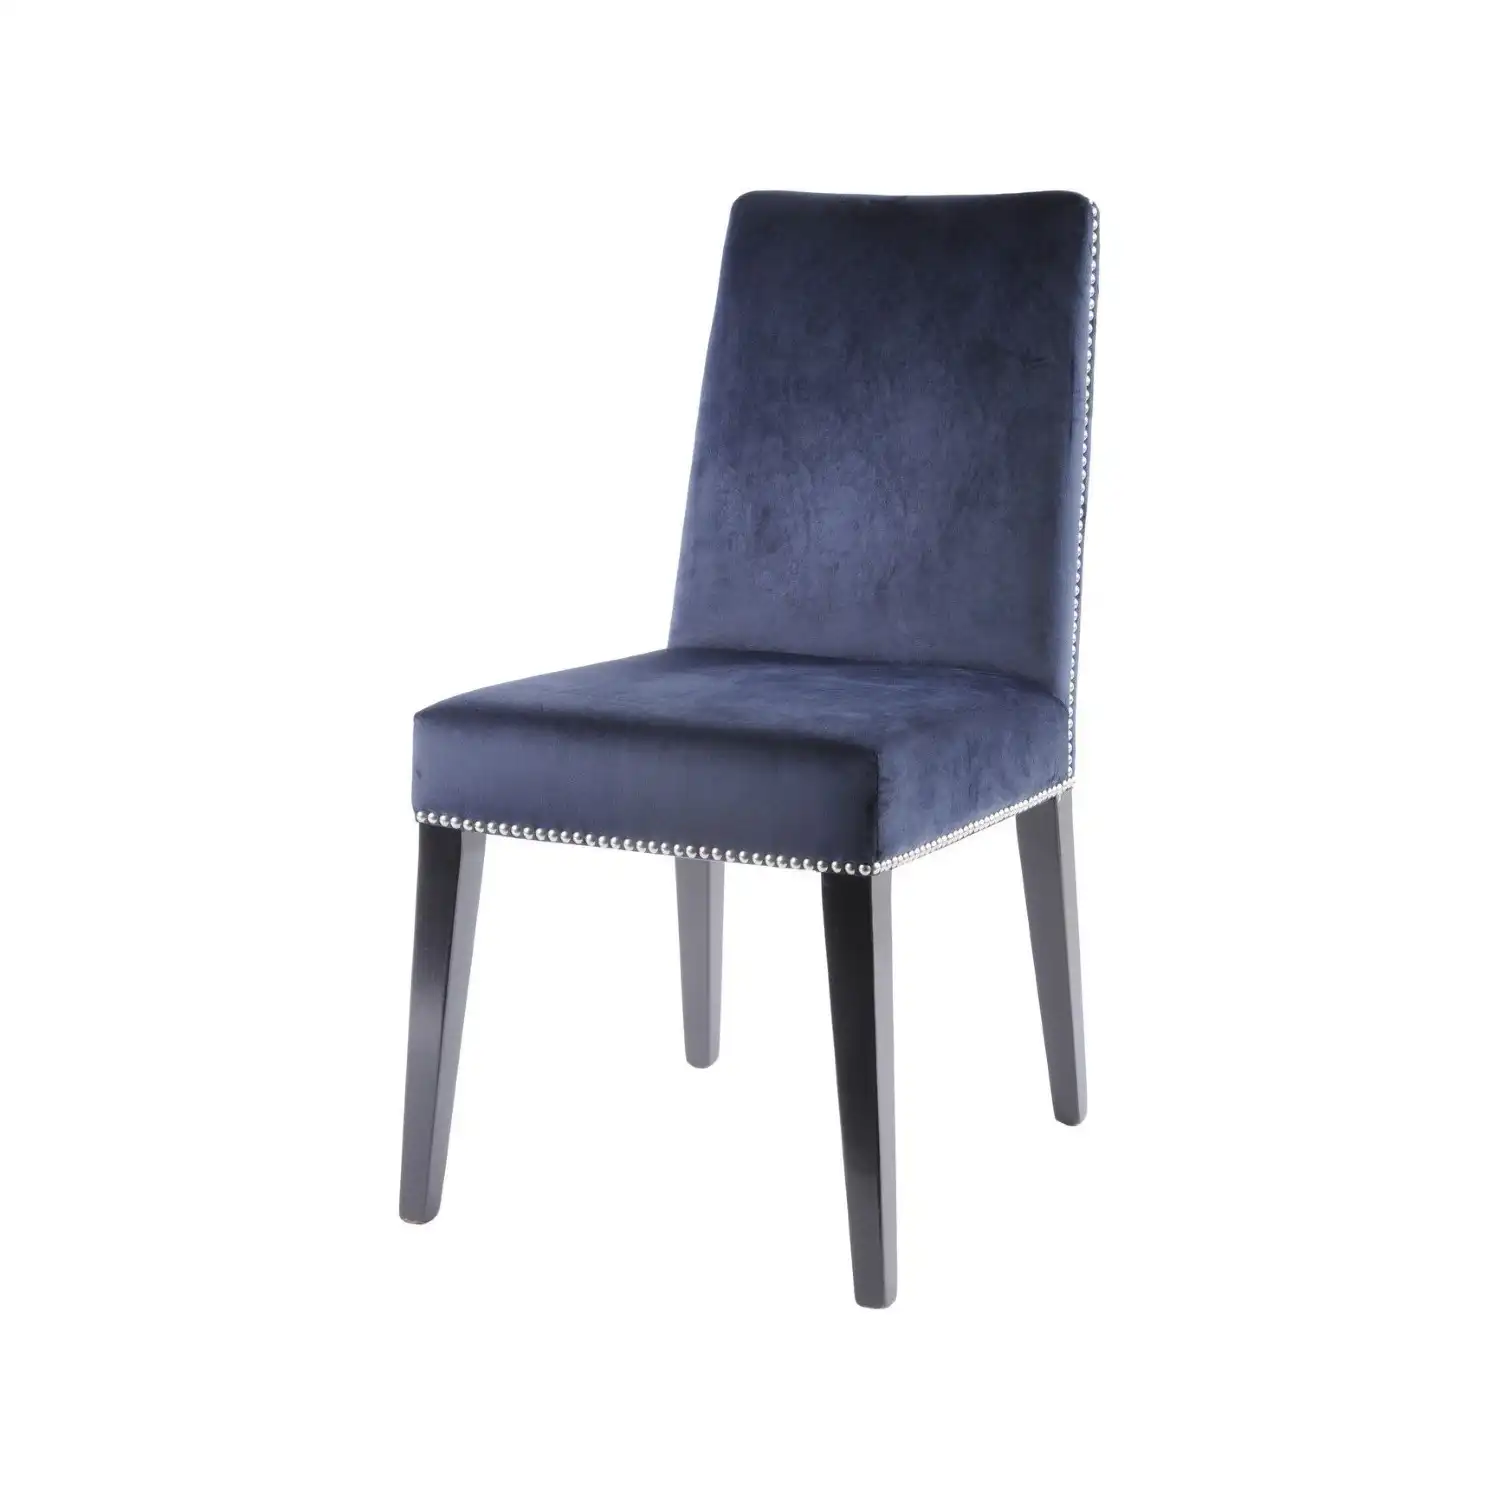 Navy Blue Velvet Dining Chair Dark Legs with Studs